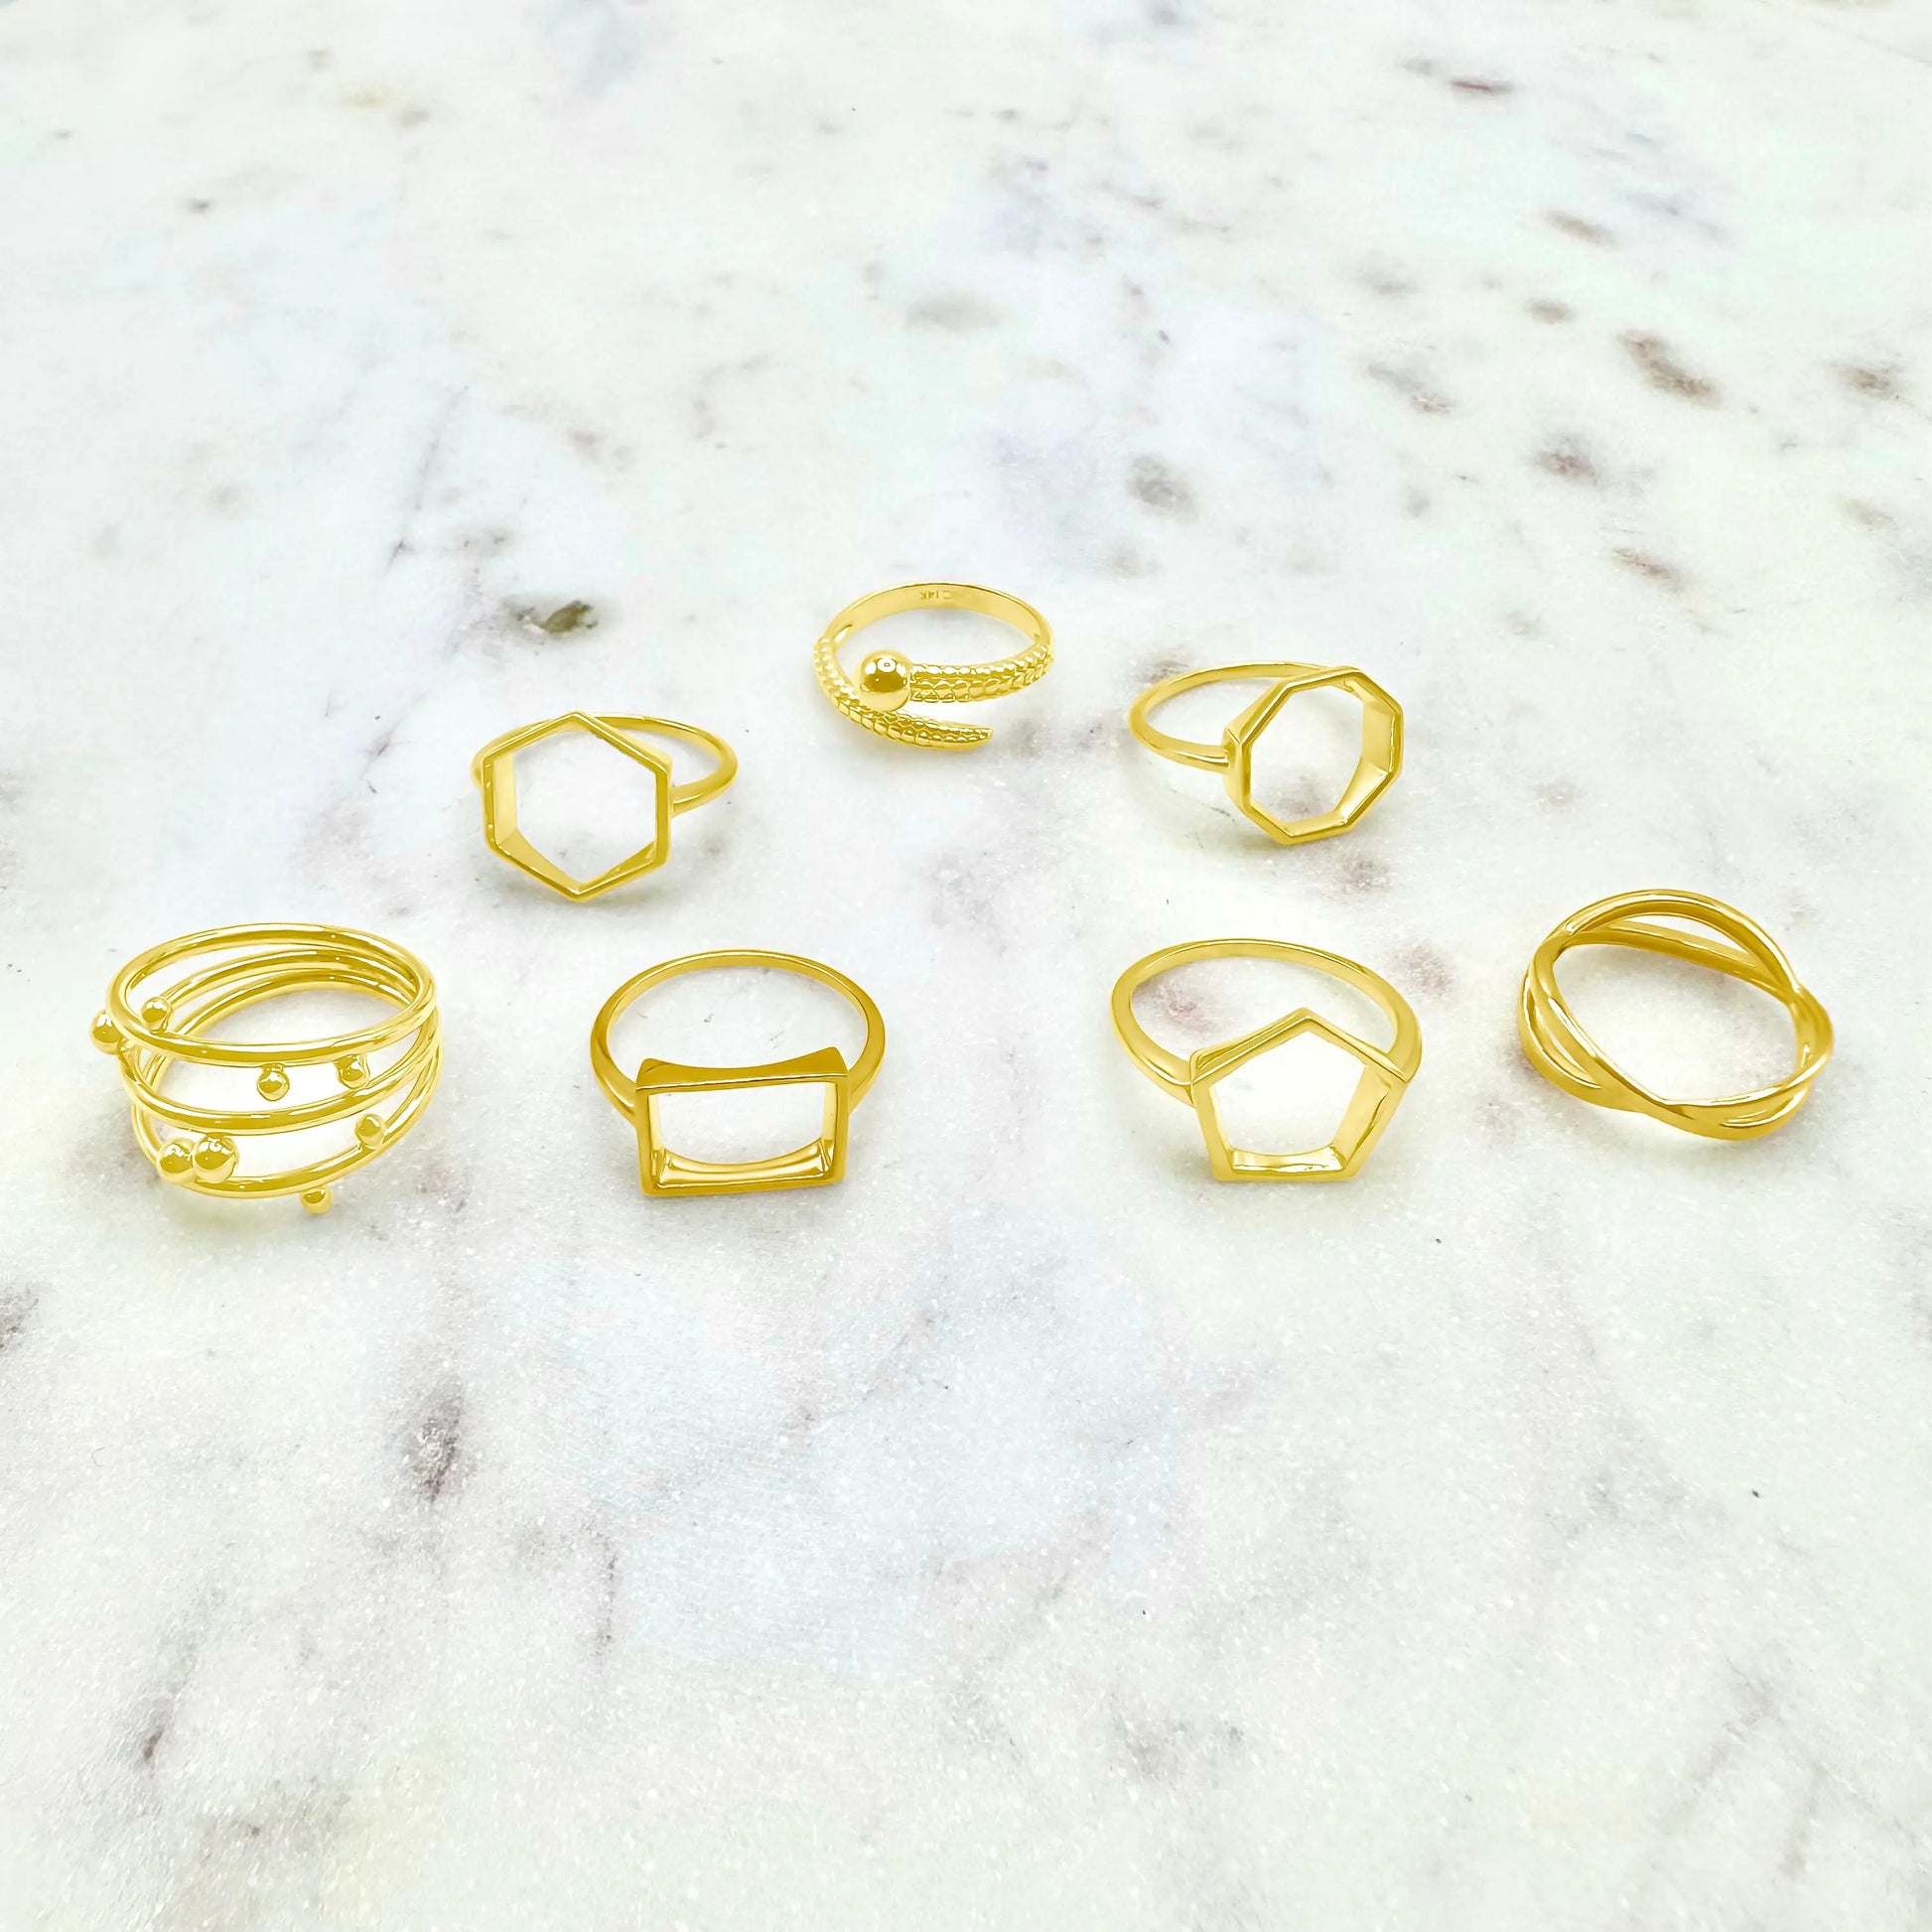 Trillium 14k Gold Ring Jewelmak Shop